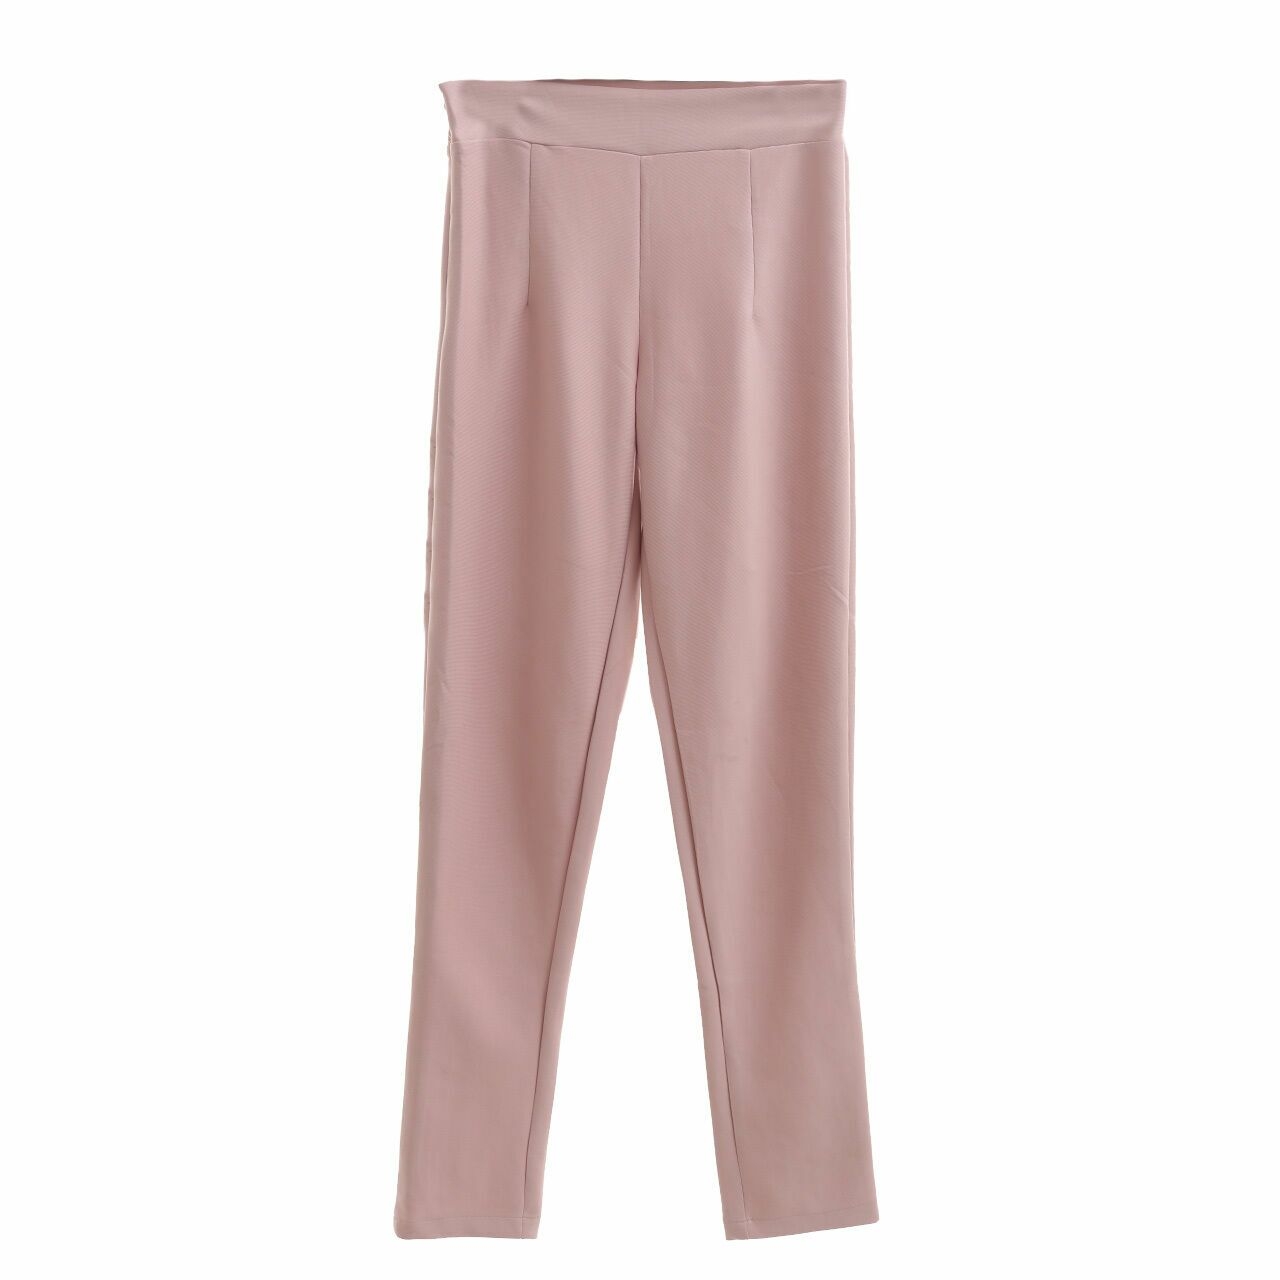 Marie & Frisco Dusty Pink Long Pants